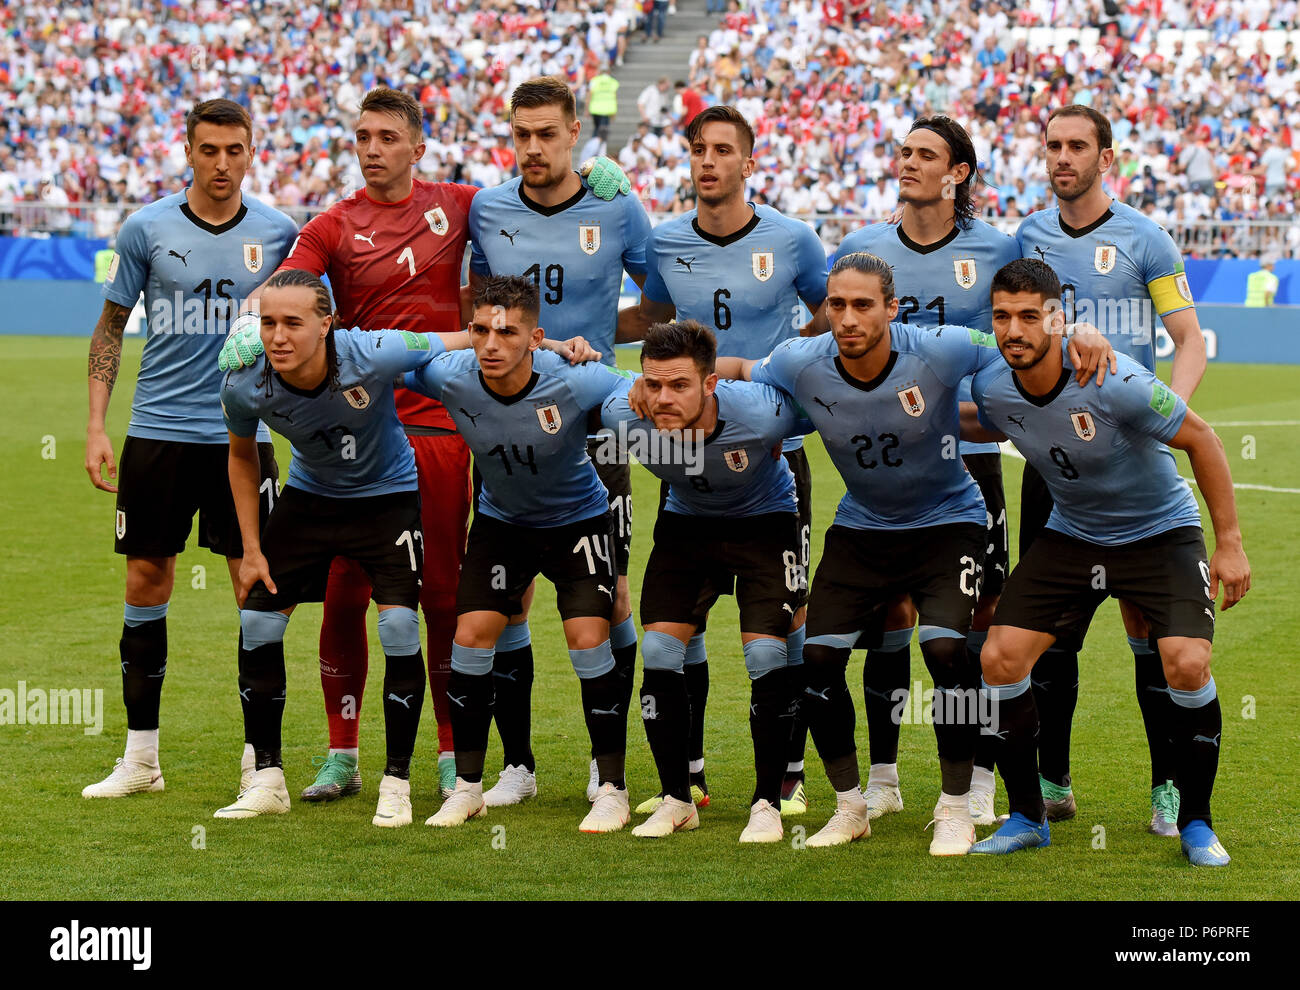 Samara Russia June 25 18 National Team Of Uruguay Before Fifa World Cup 18 Match Uruguay Vs Russia Stock Photo Alamy